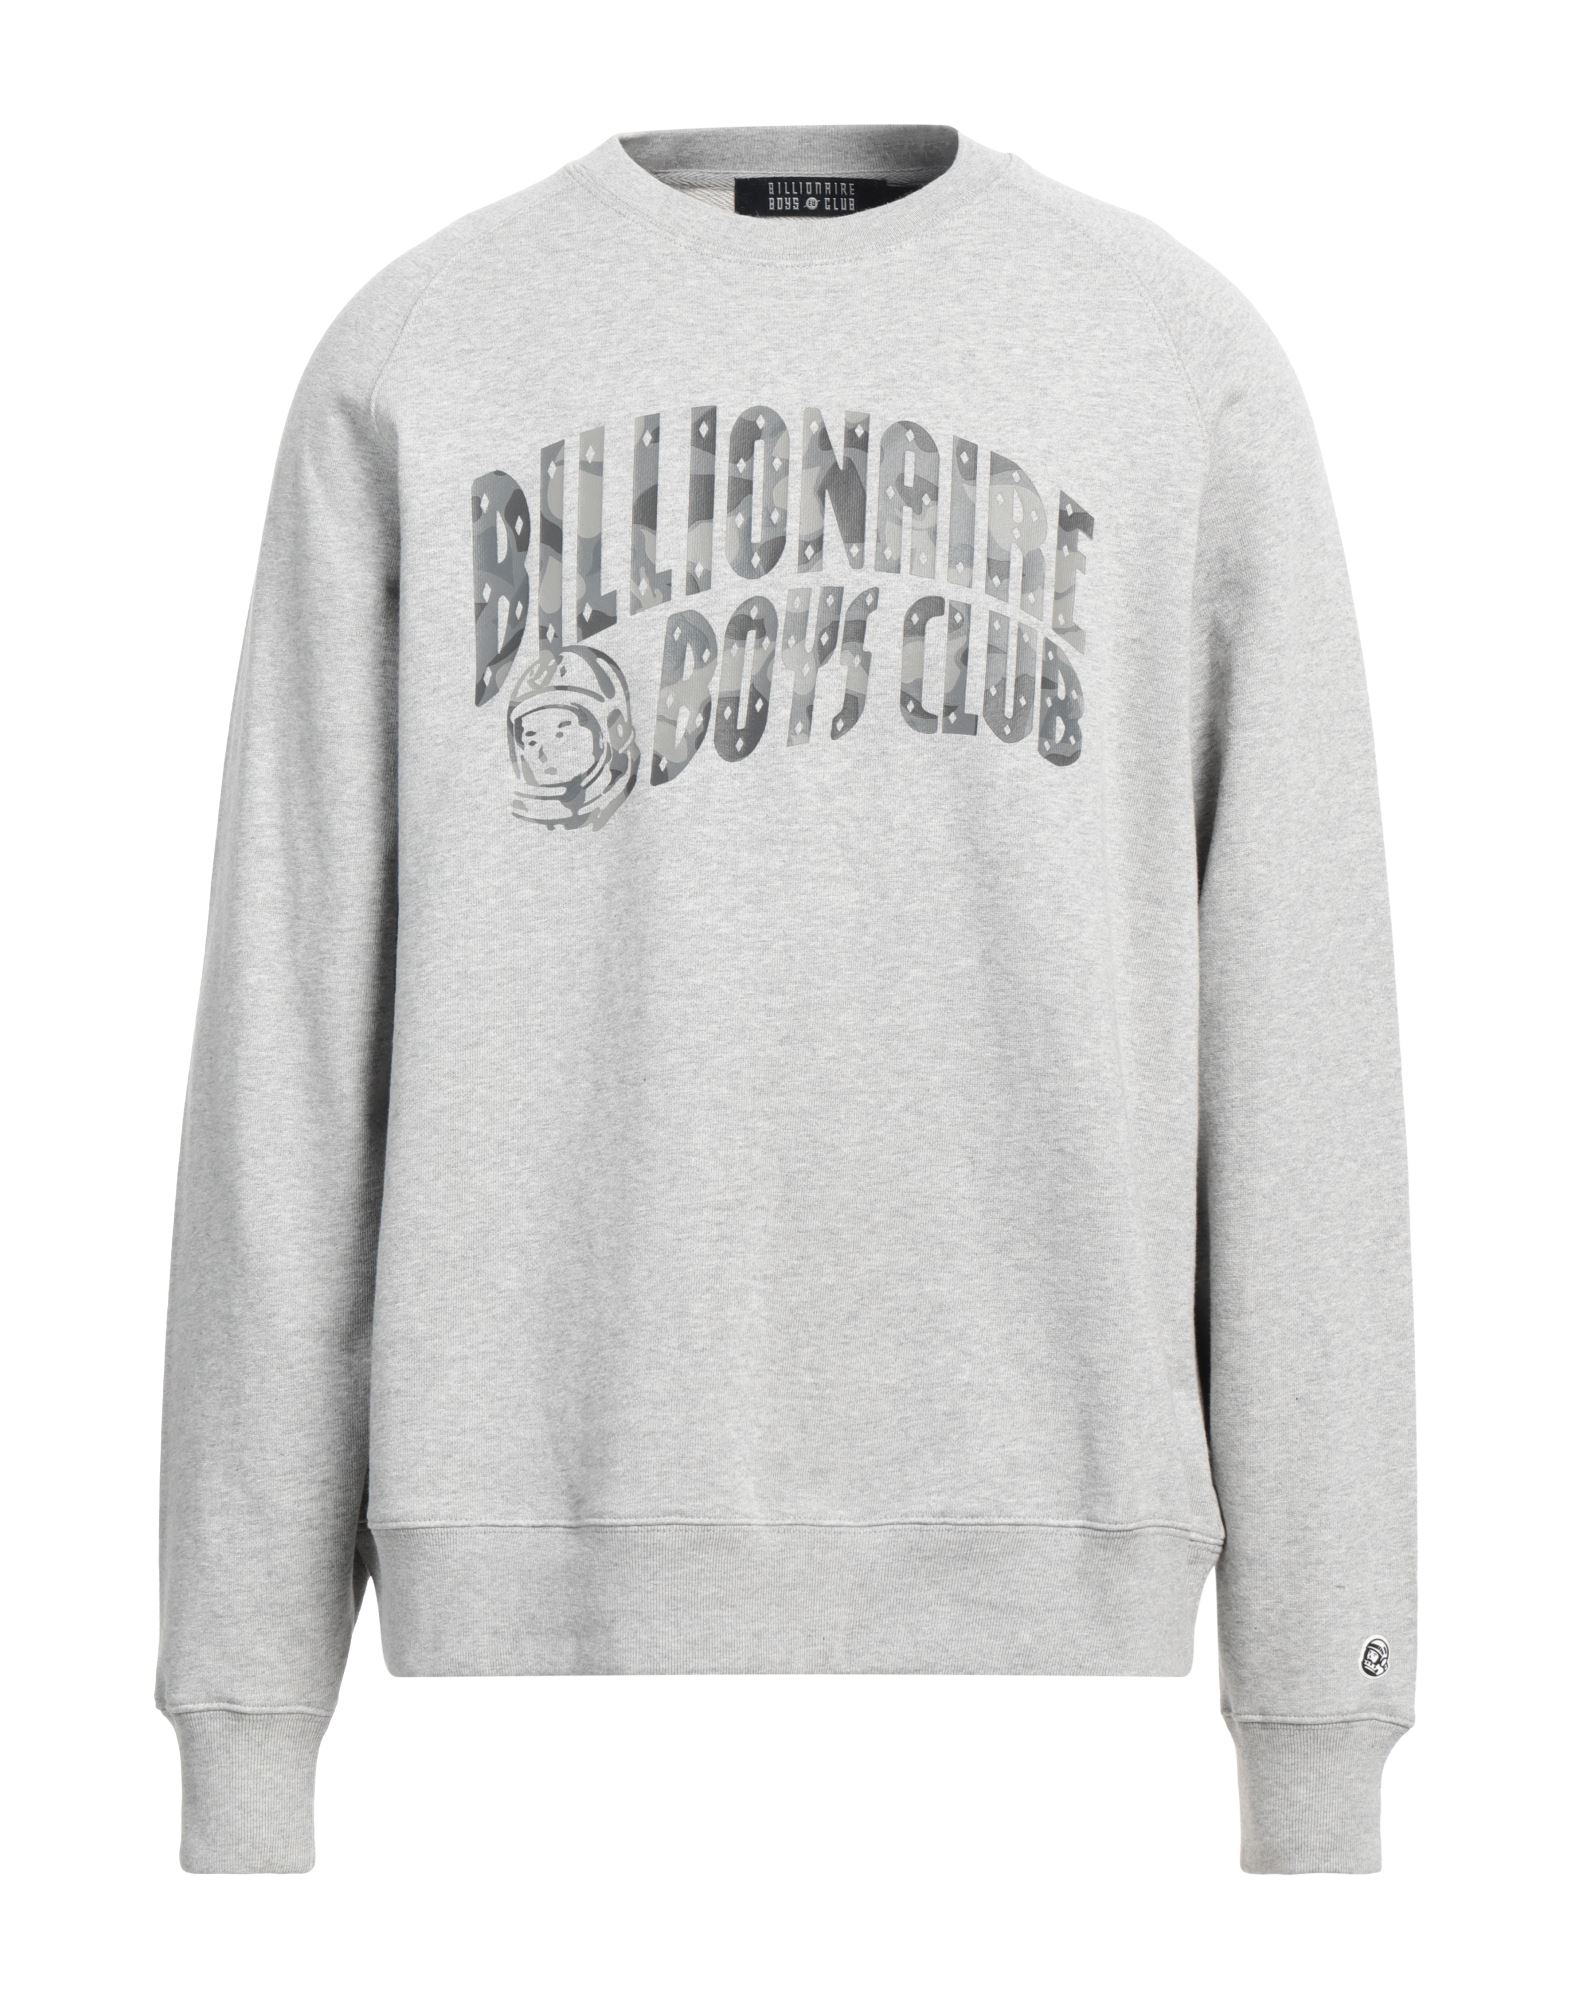 BILLIONAIRE BOYS CLUB Sweatshirt Herren Hellgrau von BILLIONAIRE BOYS CLUB